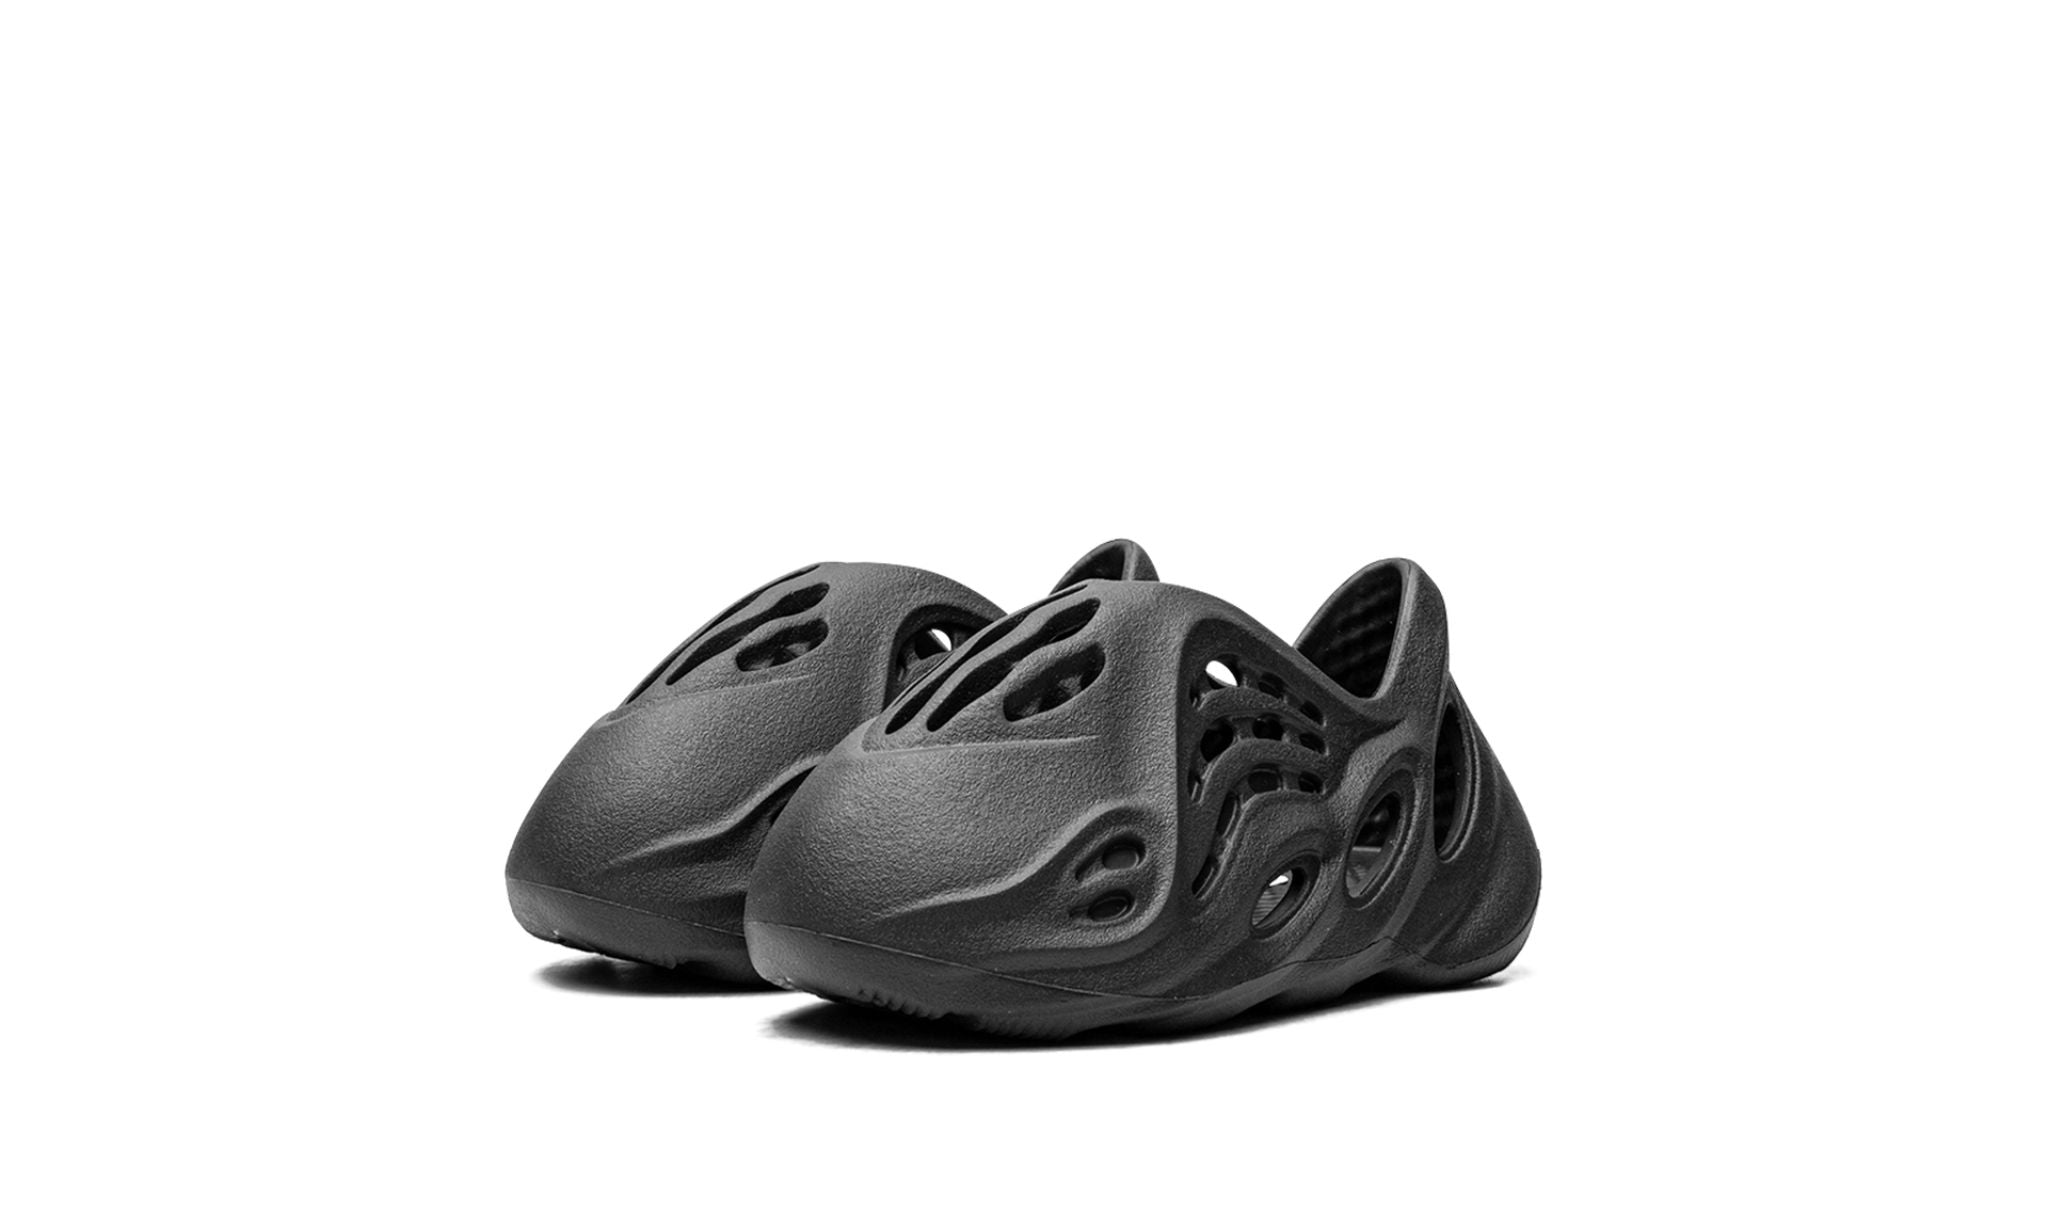 Adidas Yeezy Foam Runner “Onyx” Kids